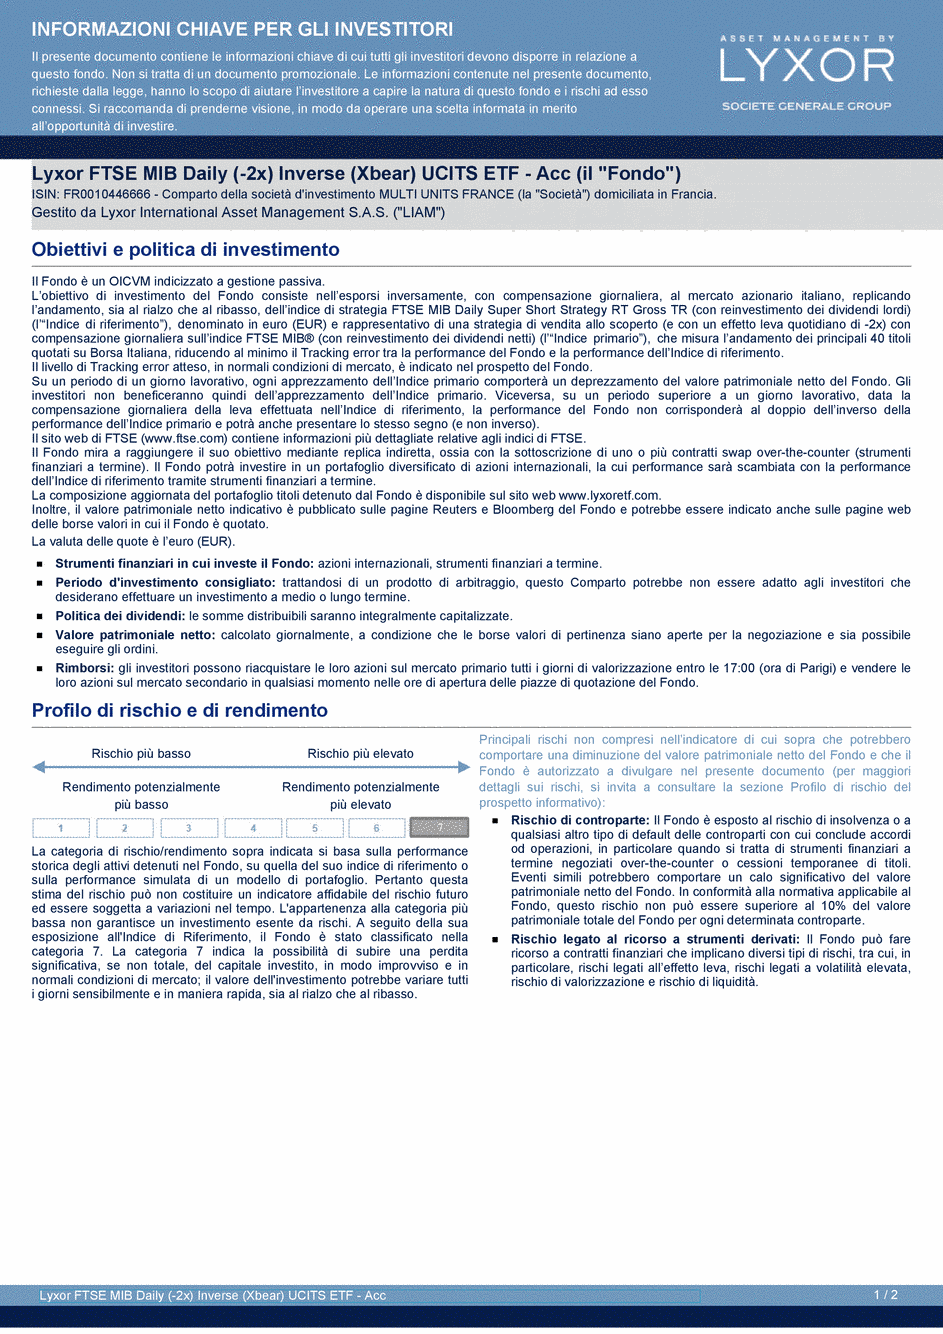 DICI Lyxor FTSE MIB Daily (-2x) Inverse (Xbear) UCITS ETF - Acc - 19/02/2021 - Italien